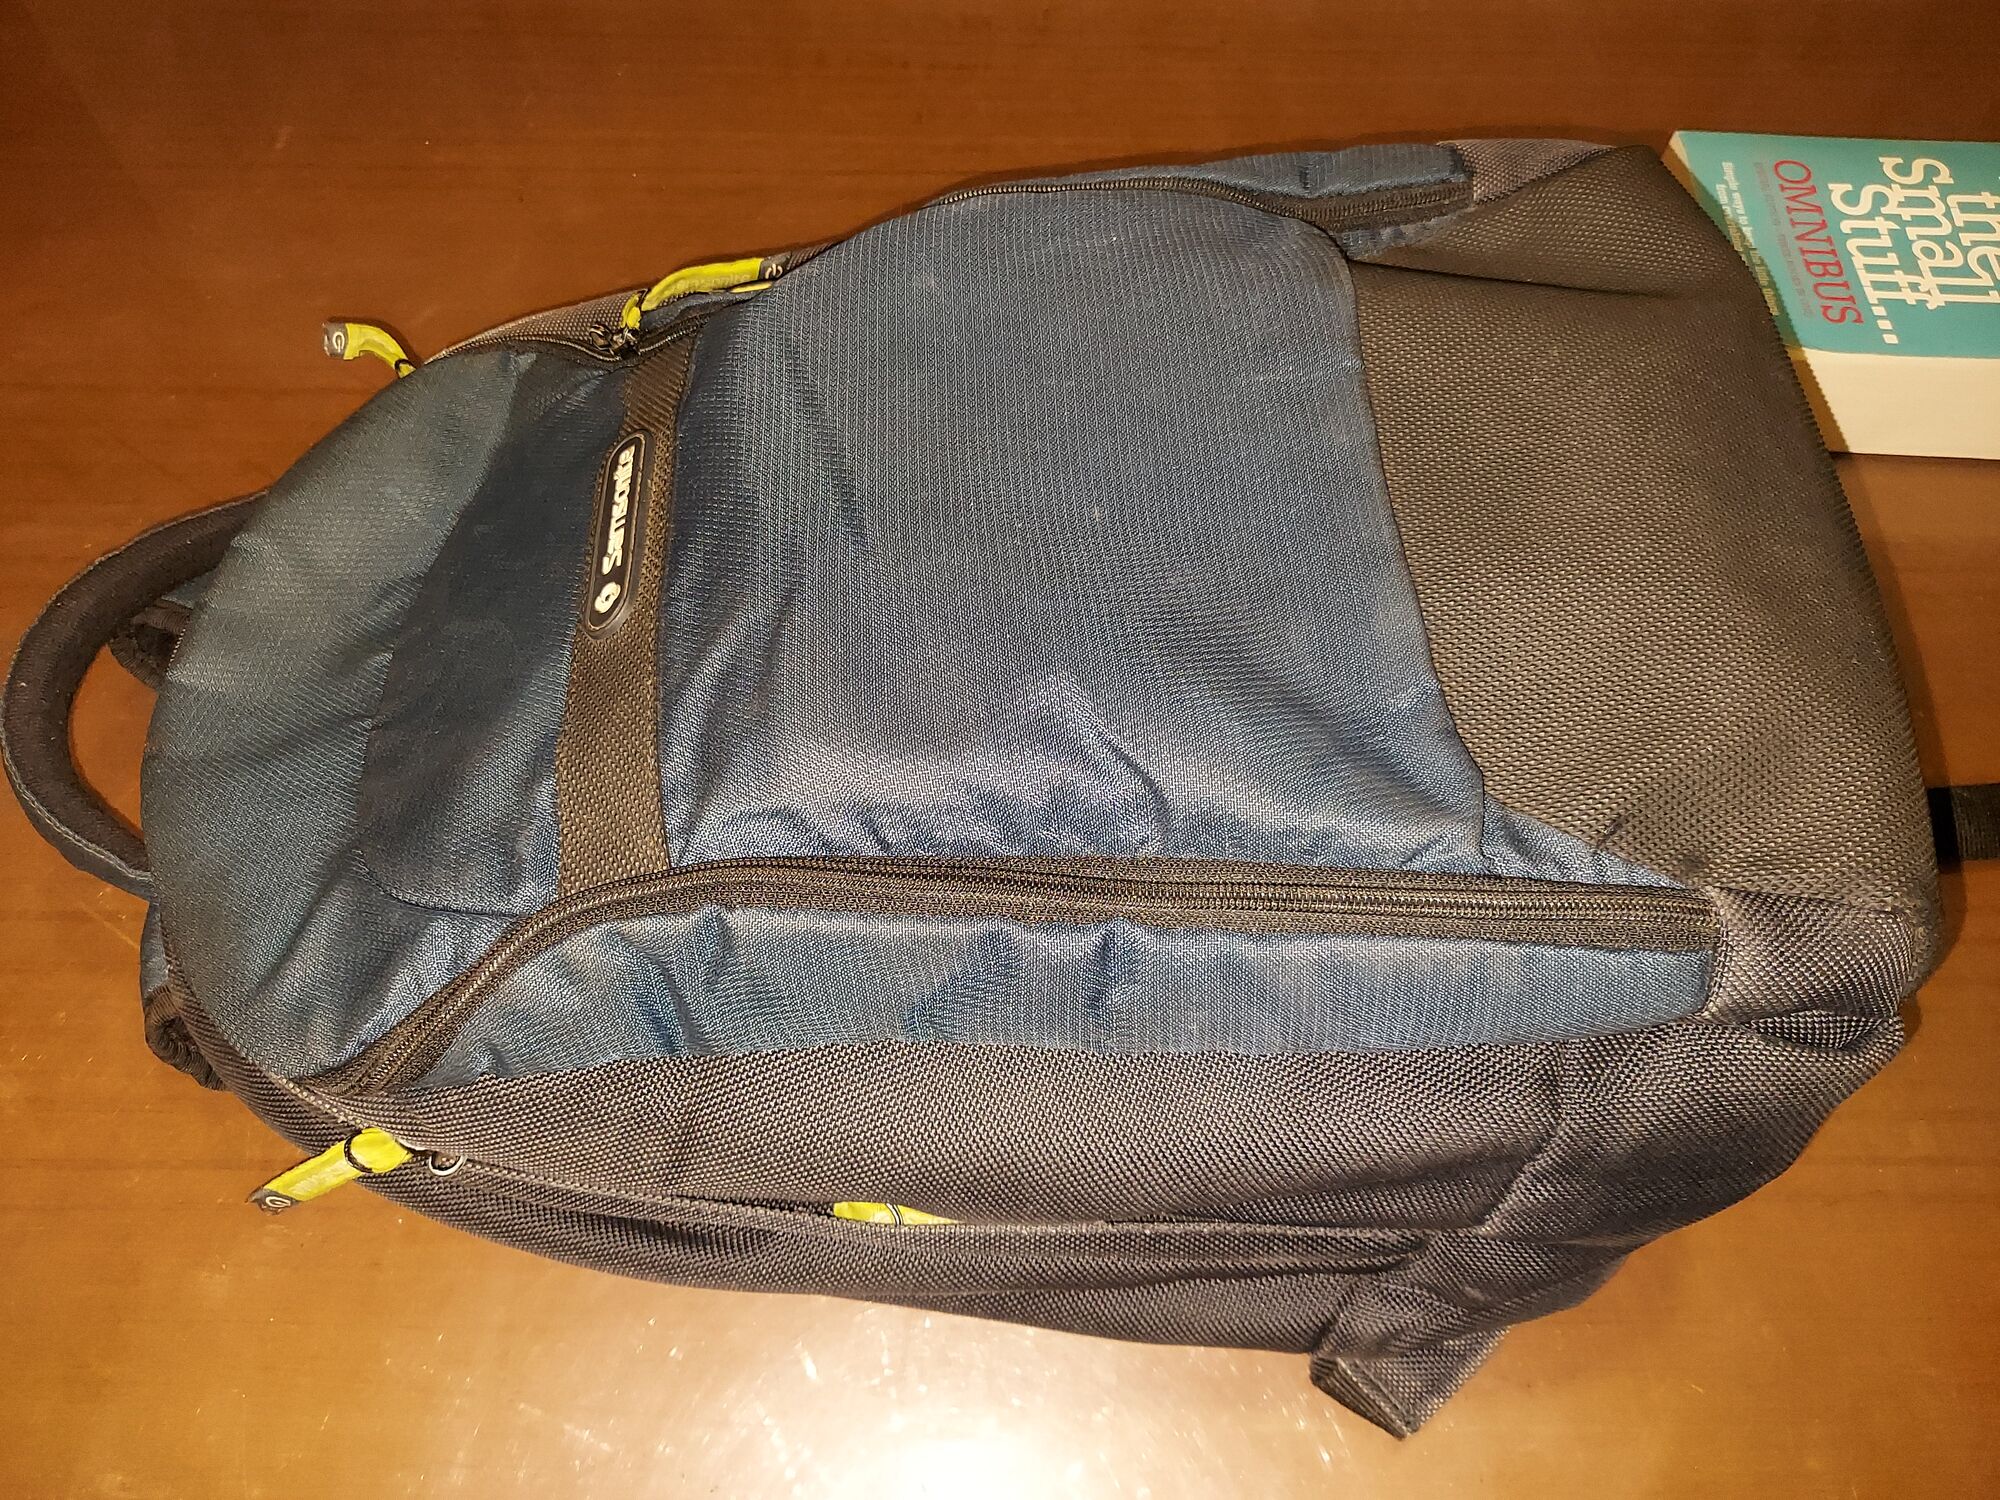 My Laptop Bag - A Blue Samsonite